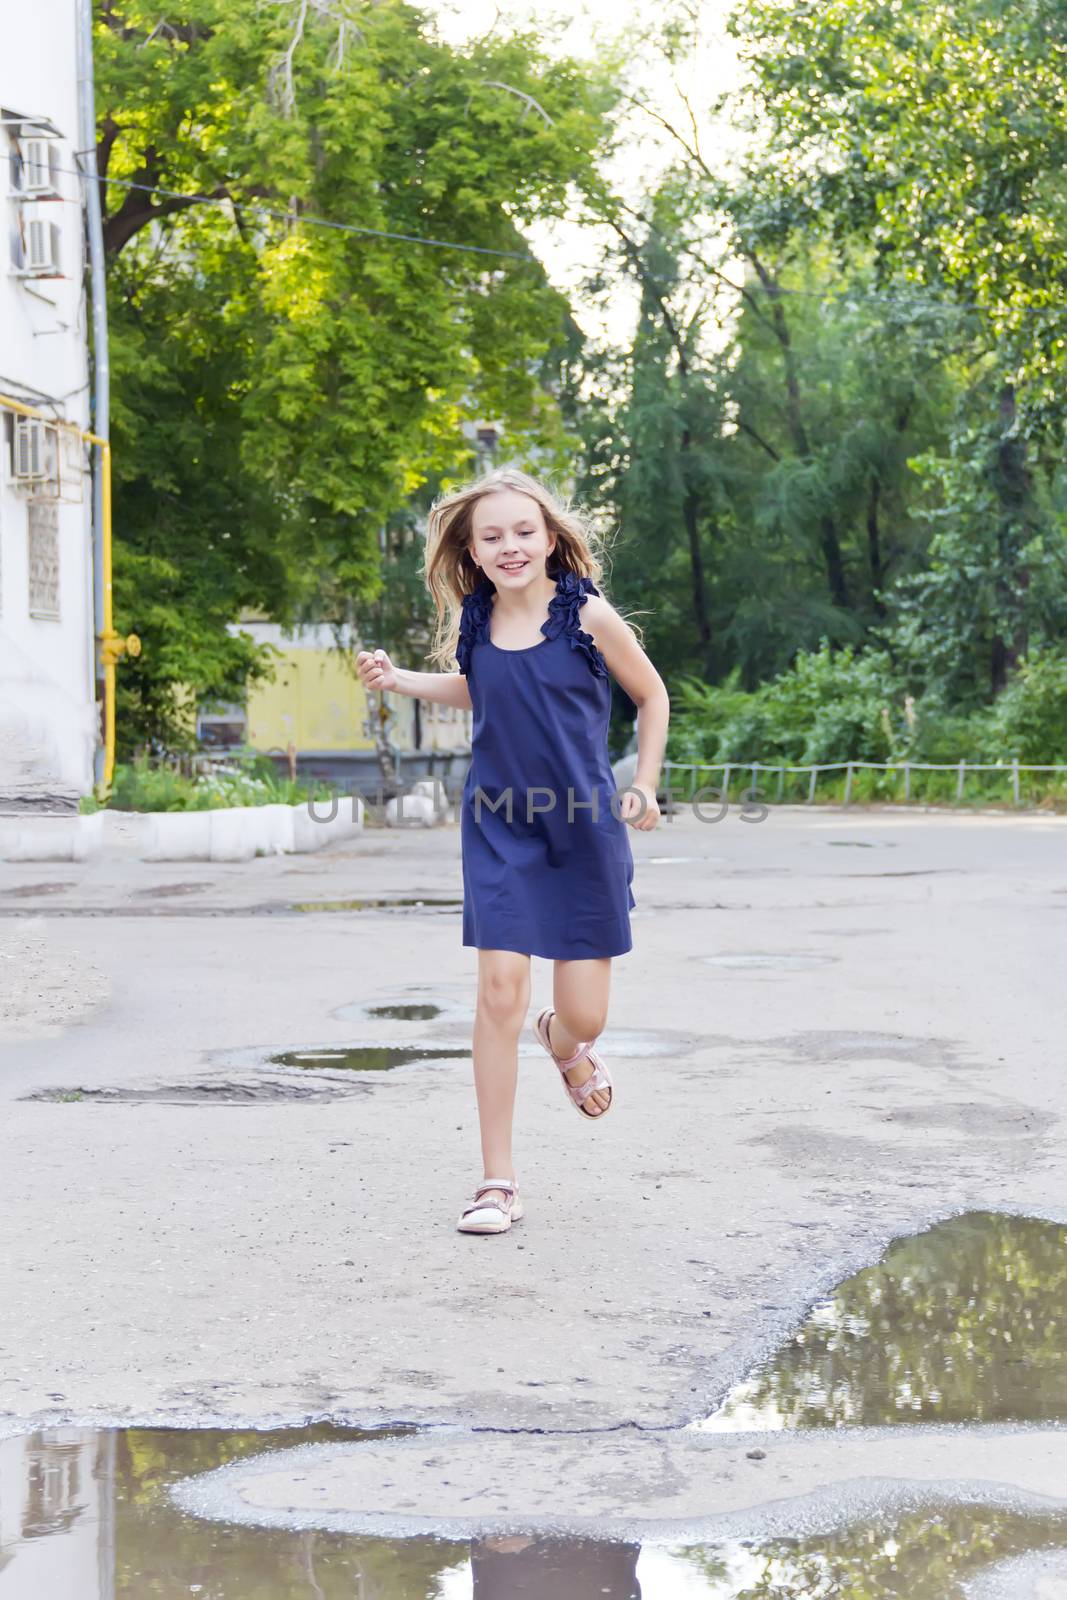 Caucasian girl run in summer with disheveled hair by Julialine